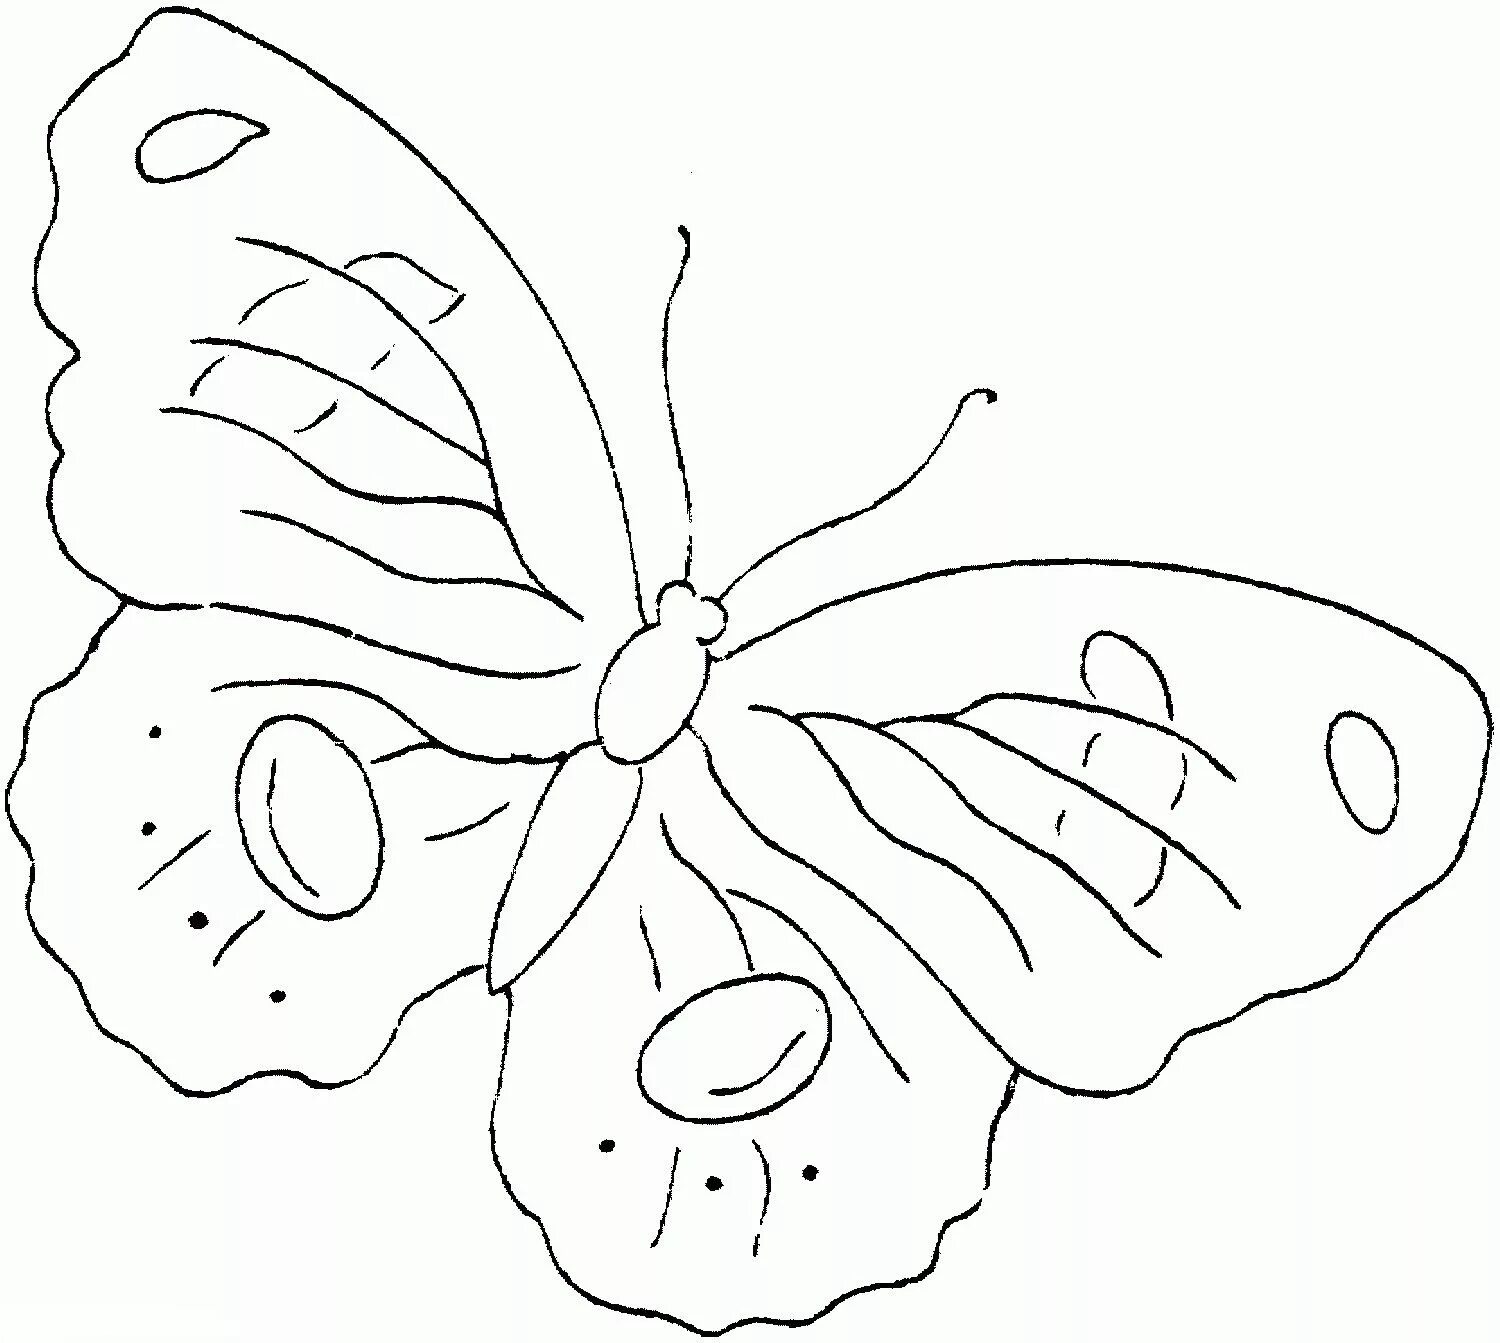 Бабочка раскраска для детей. Бабочка раскраска для малышей. Трафарет бабочки для рисования. Бабочка трафарет для раскрашивания. Рисование картинки шаблоны